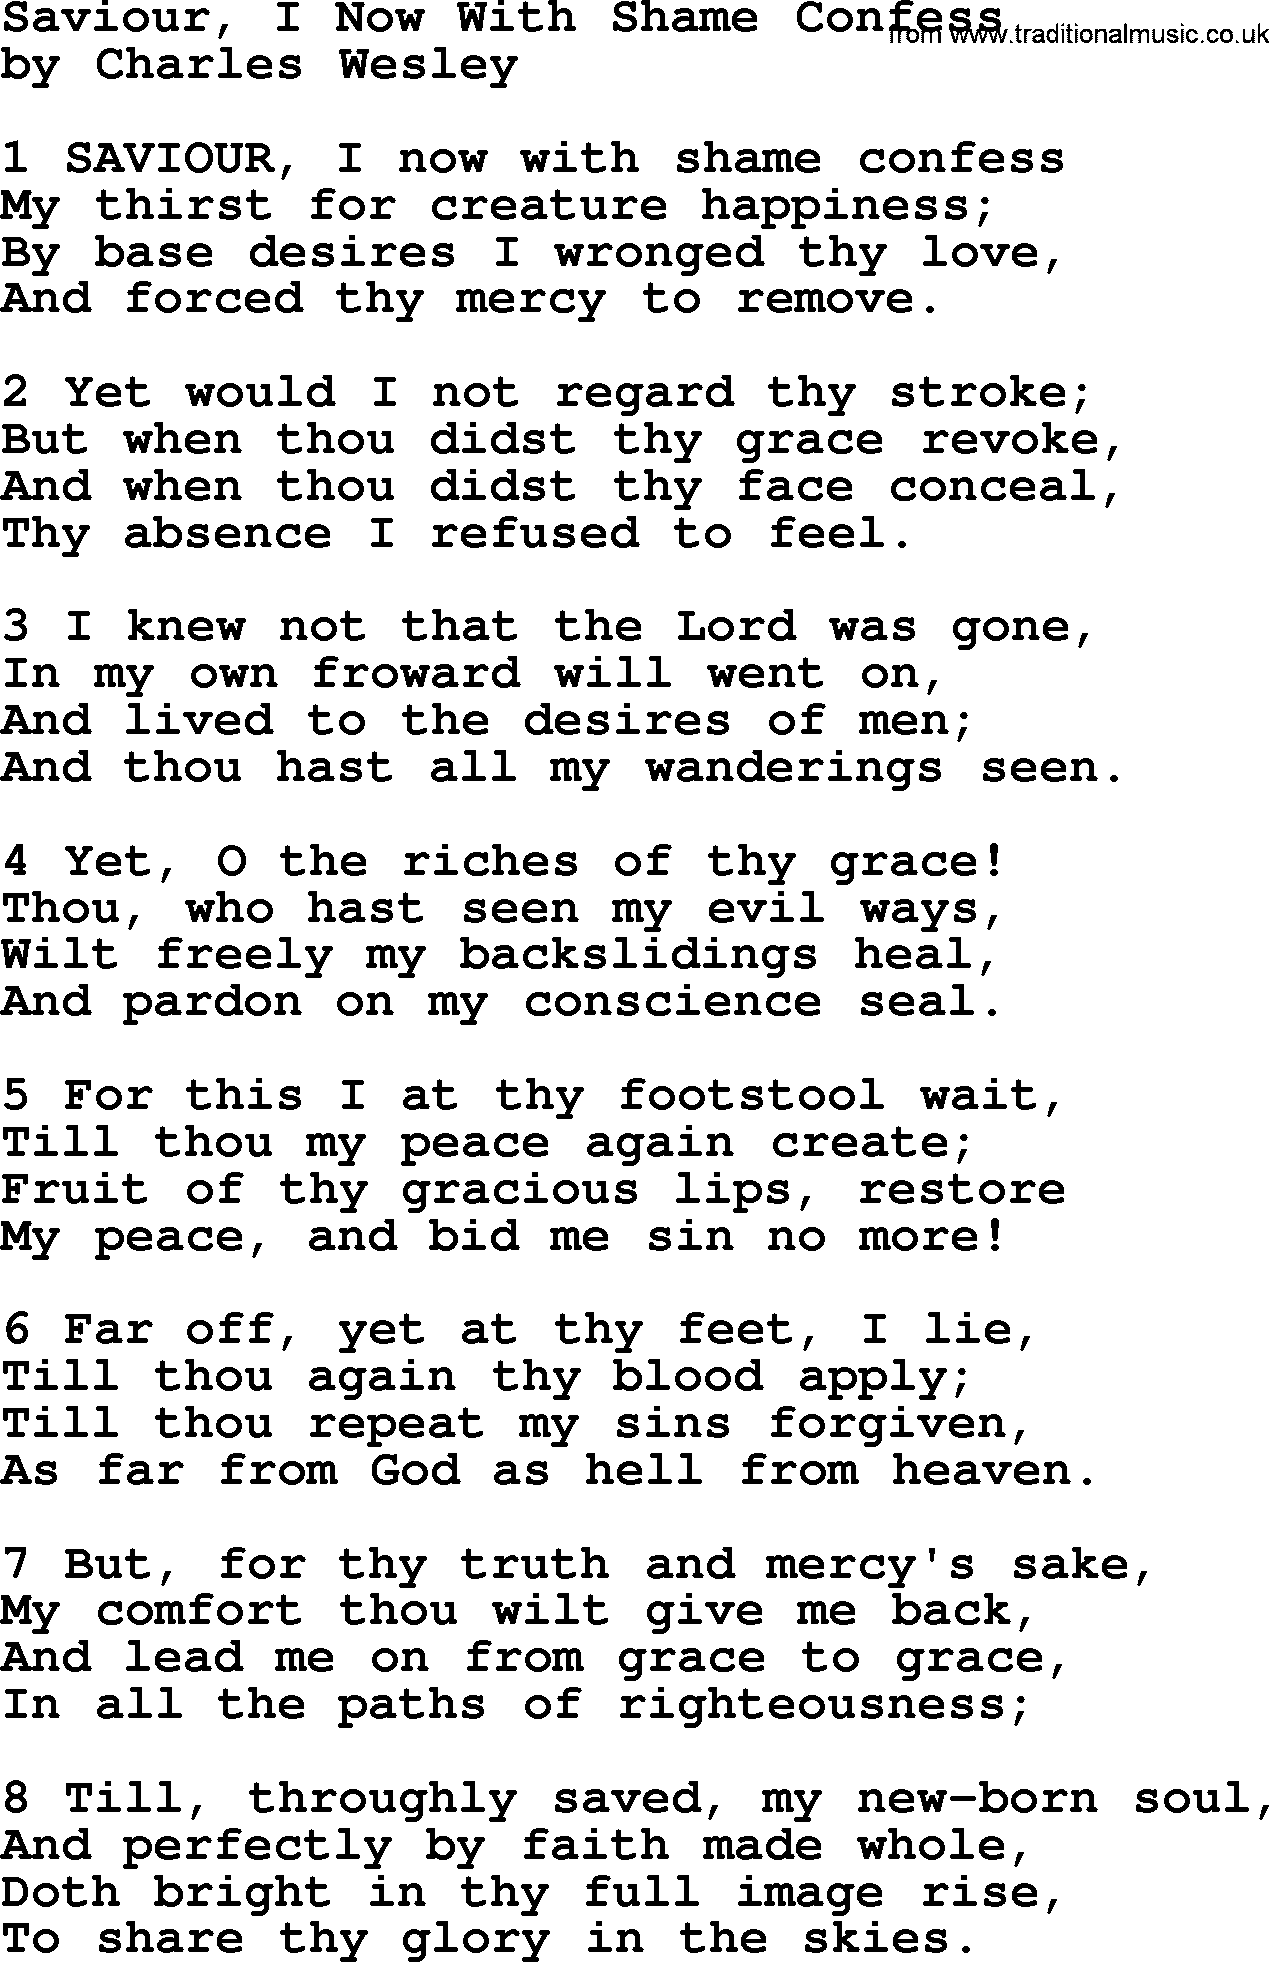 Charles Wesley hymn: Saviour, I Now With Shame Confess, lyrics